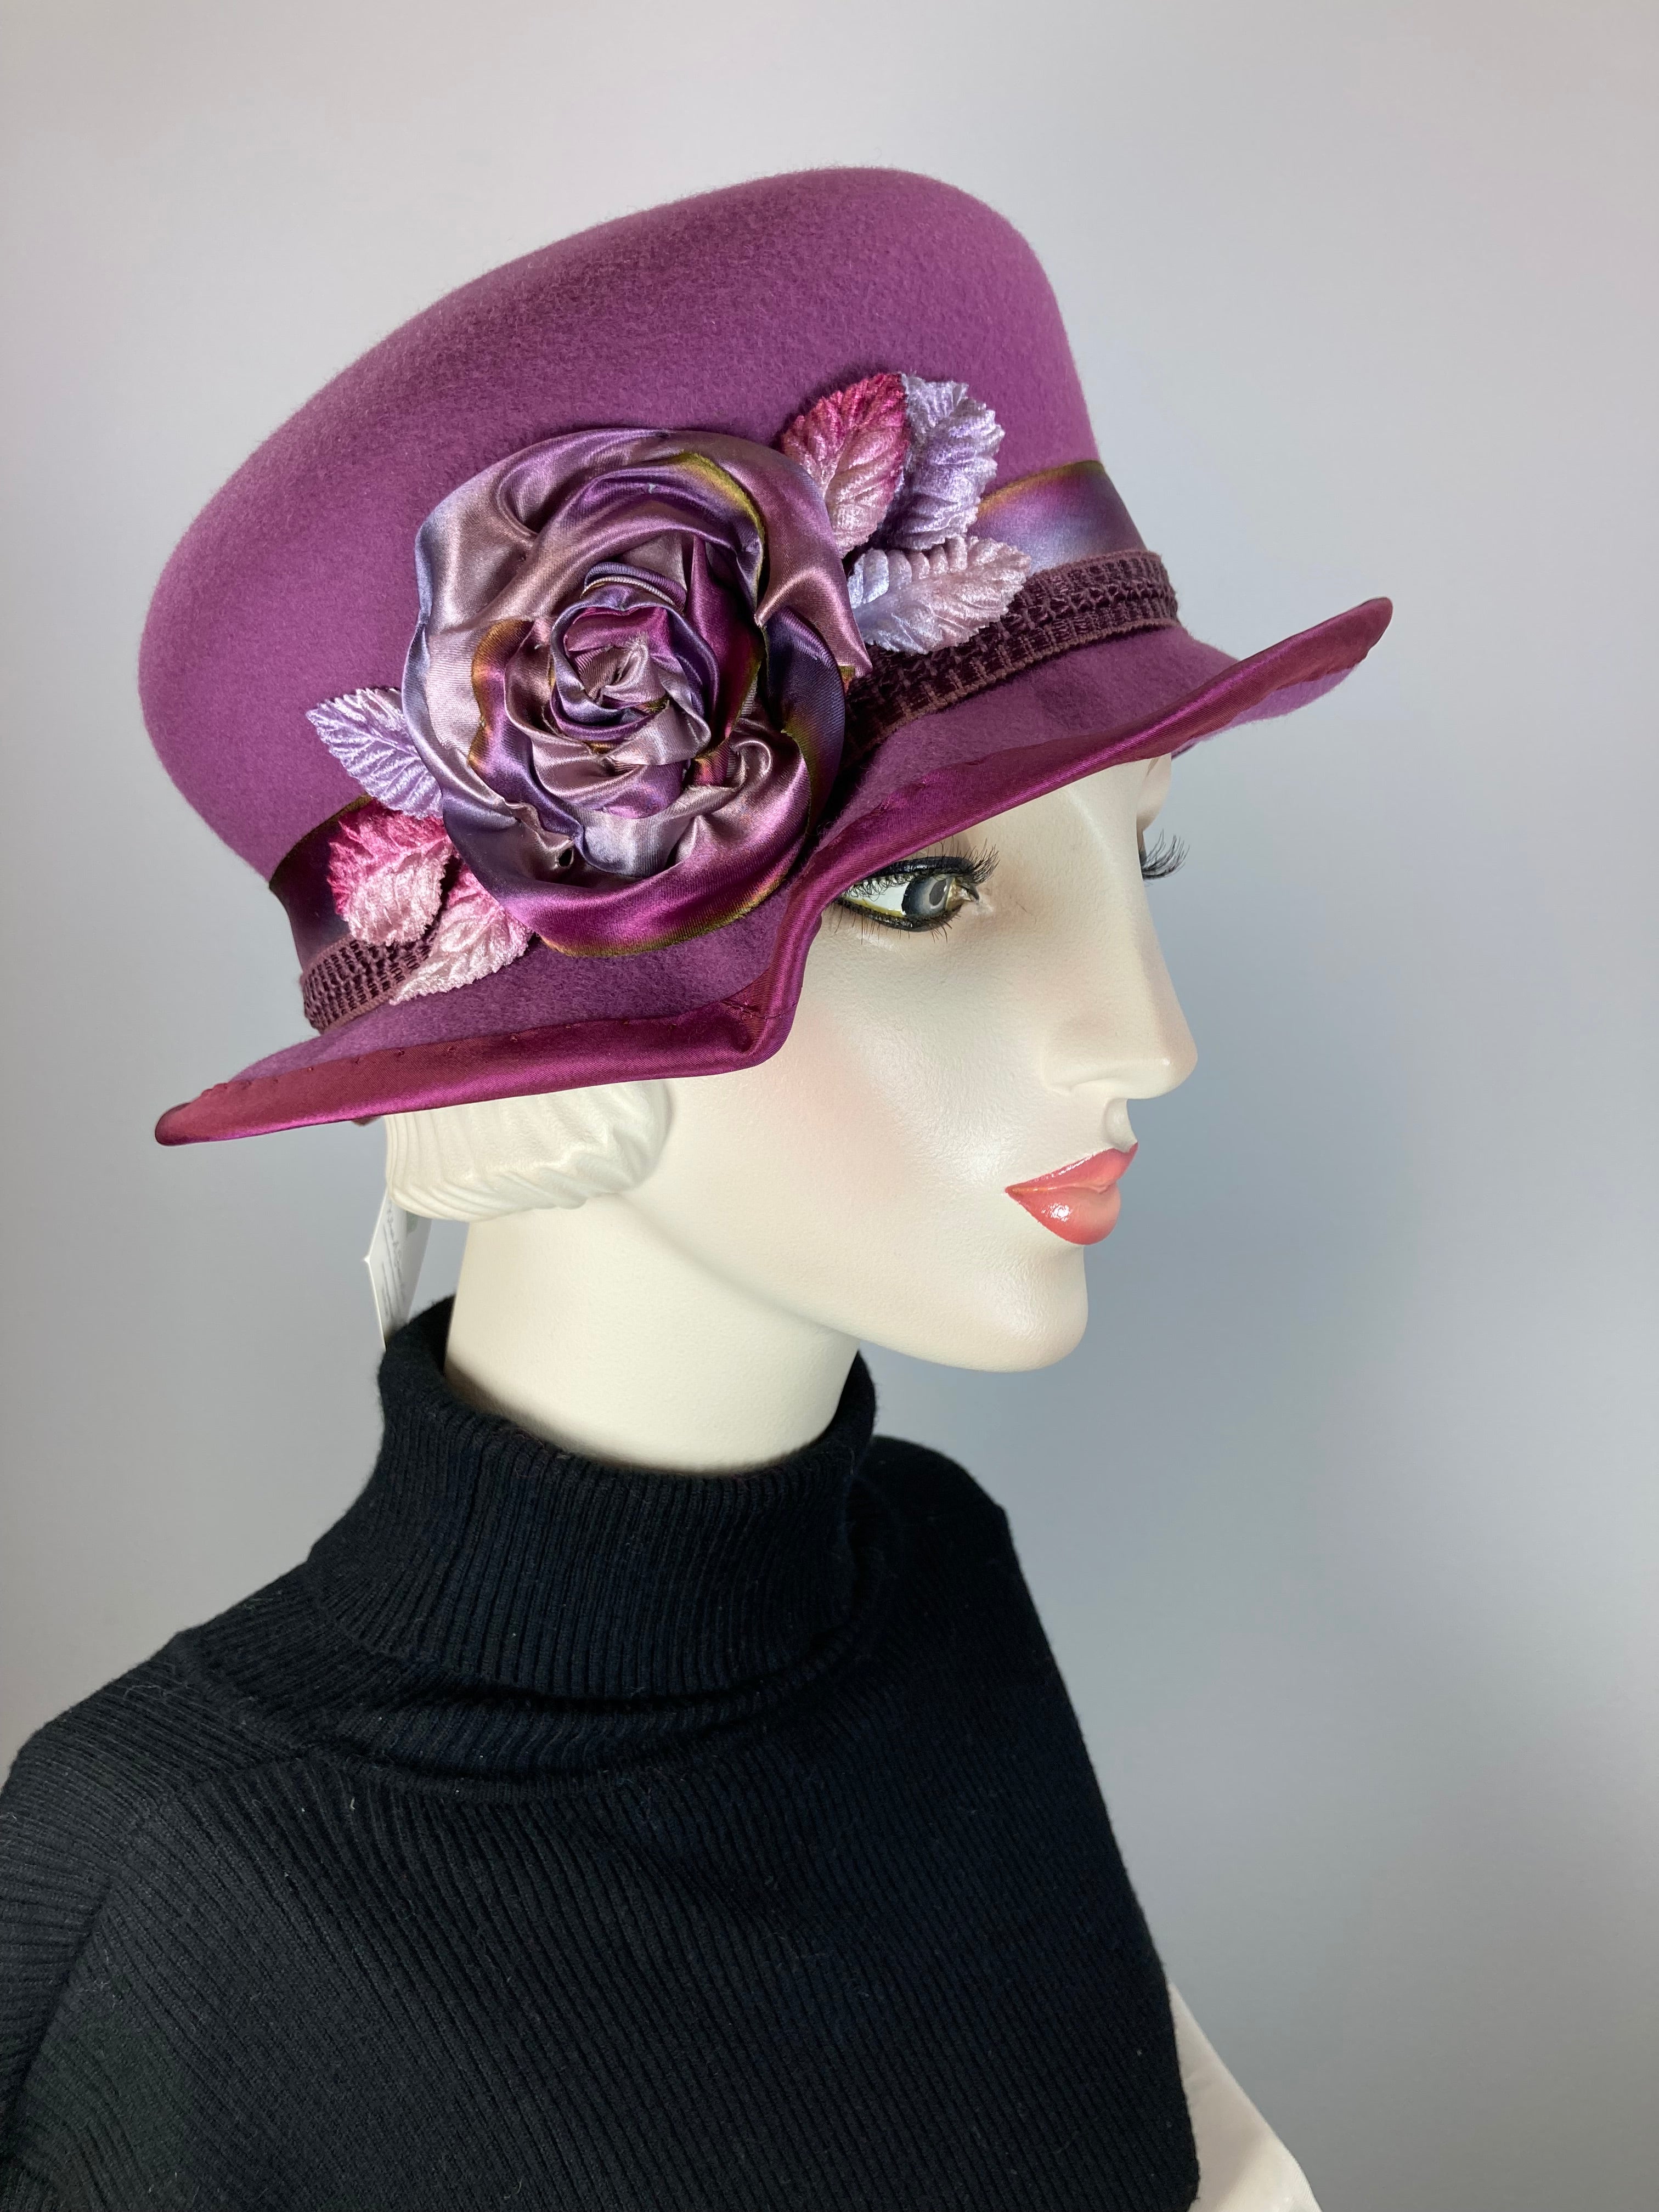 Women's purple cloche hat. 1920s style hat. Winter hat Downton Abbey. Ladies wool felt hat. Fashion cloche hat. Handmade vintage inspired.